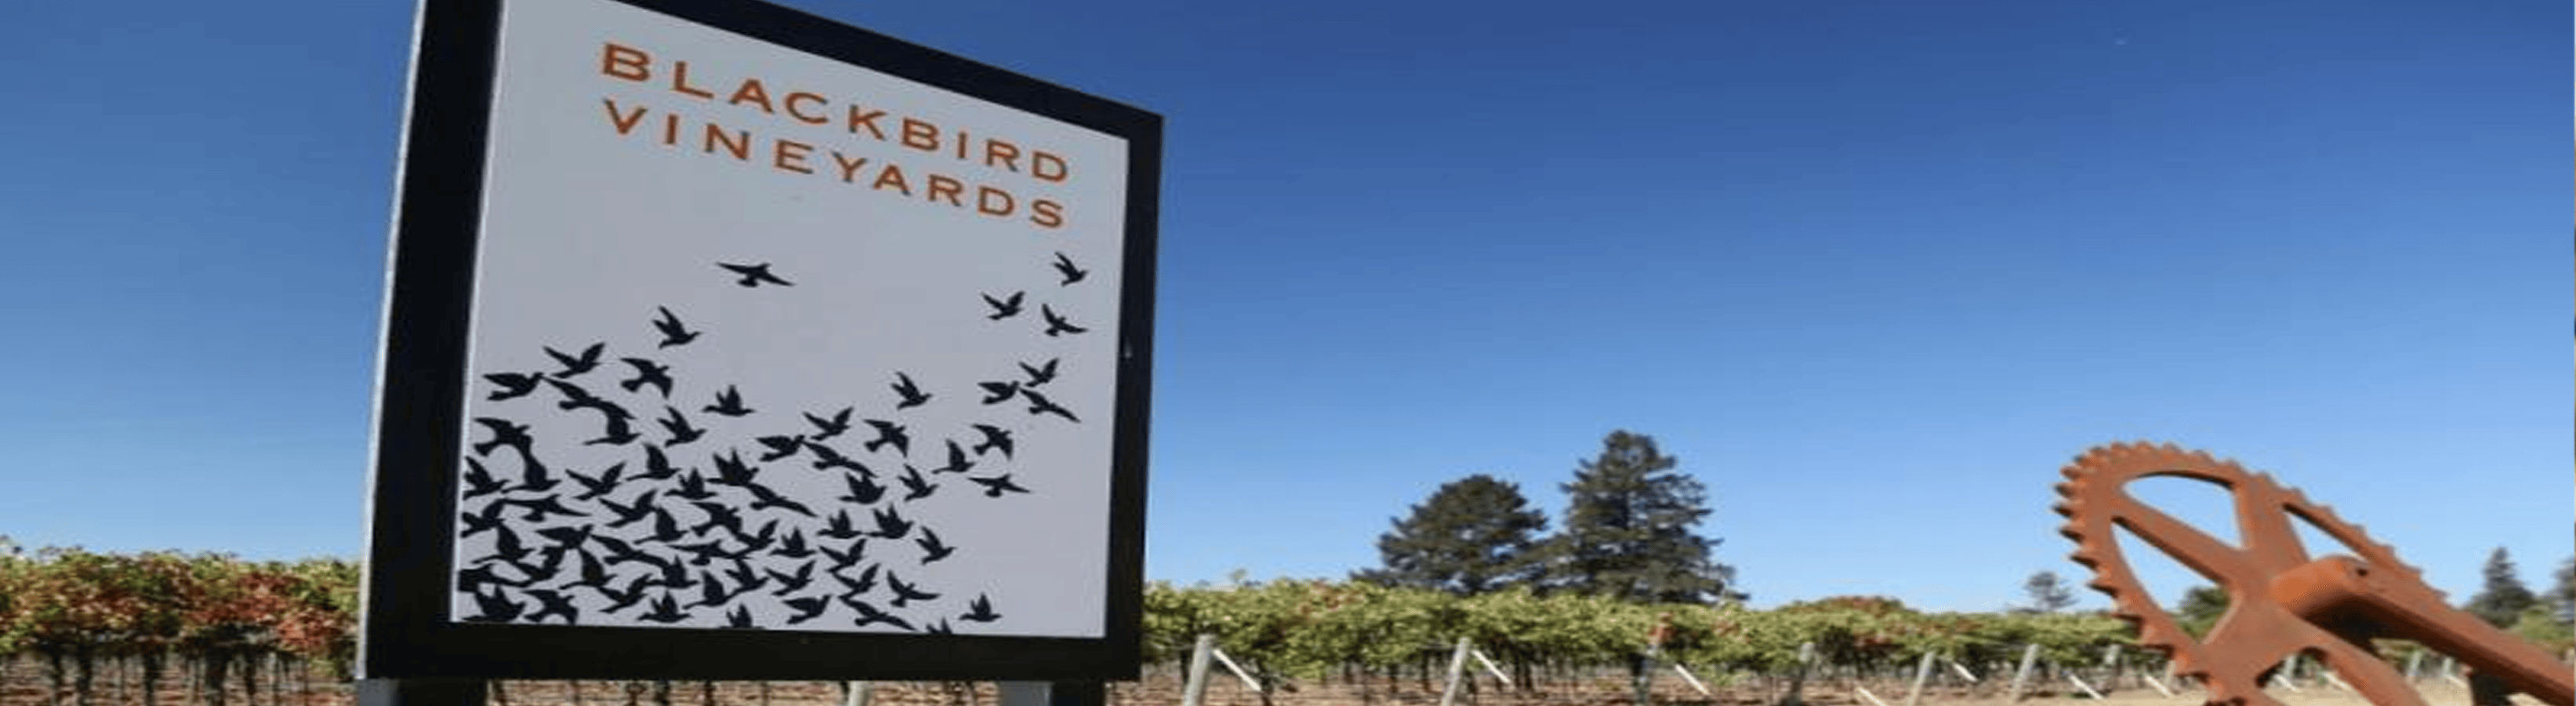 blackbird vineyards arise